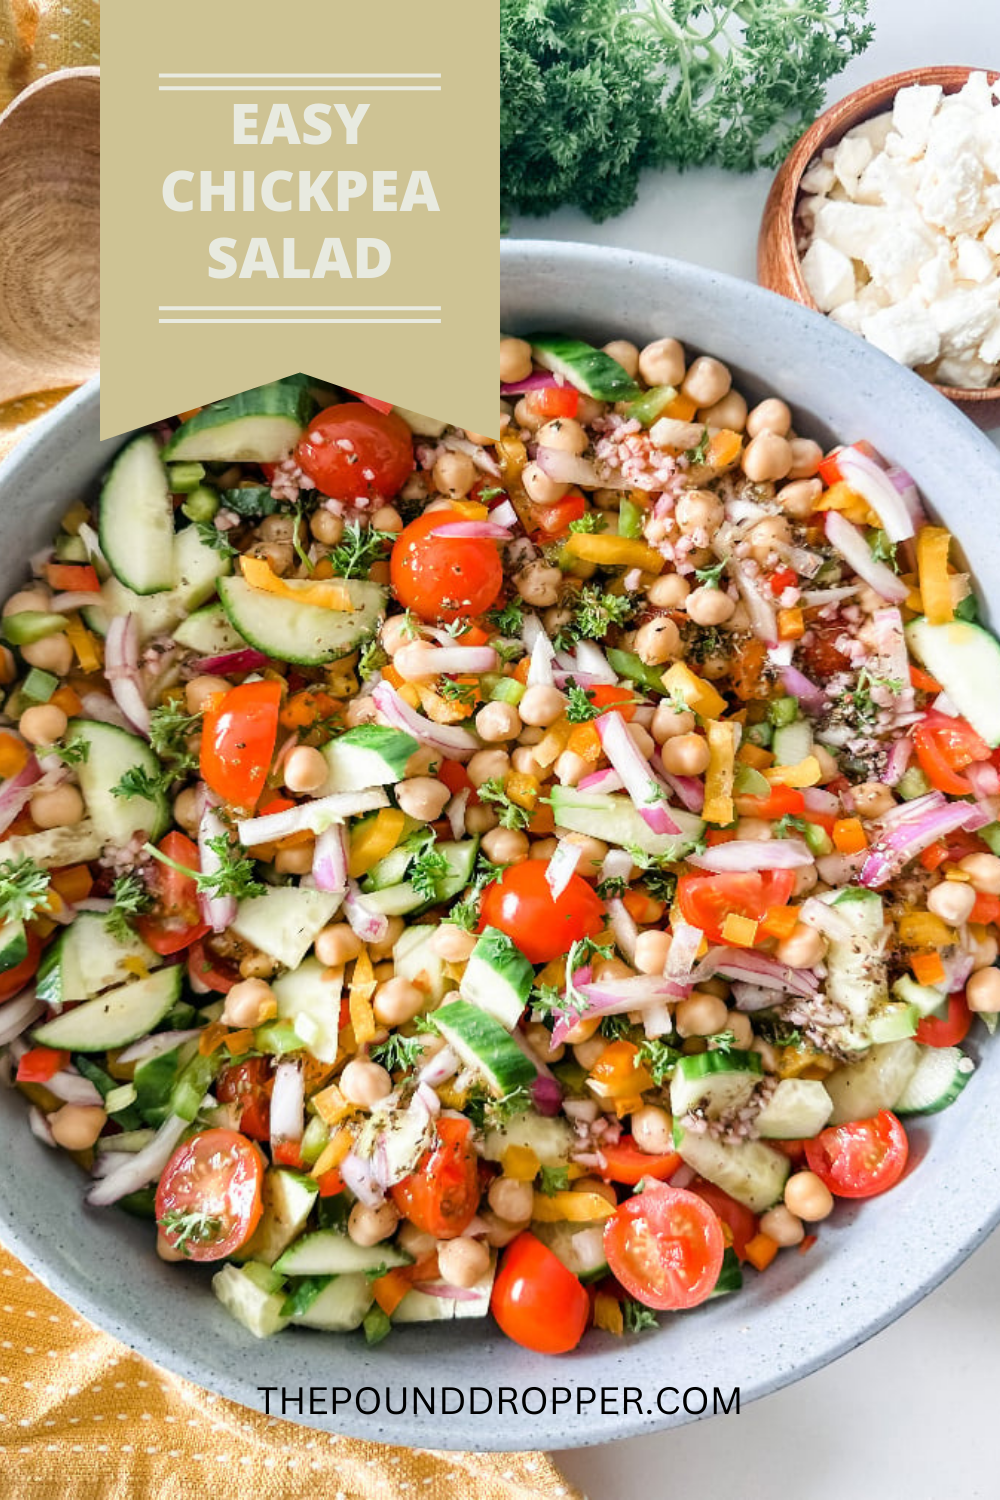 Easy Chickpea Salad via @pounddropper